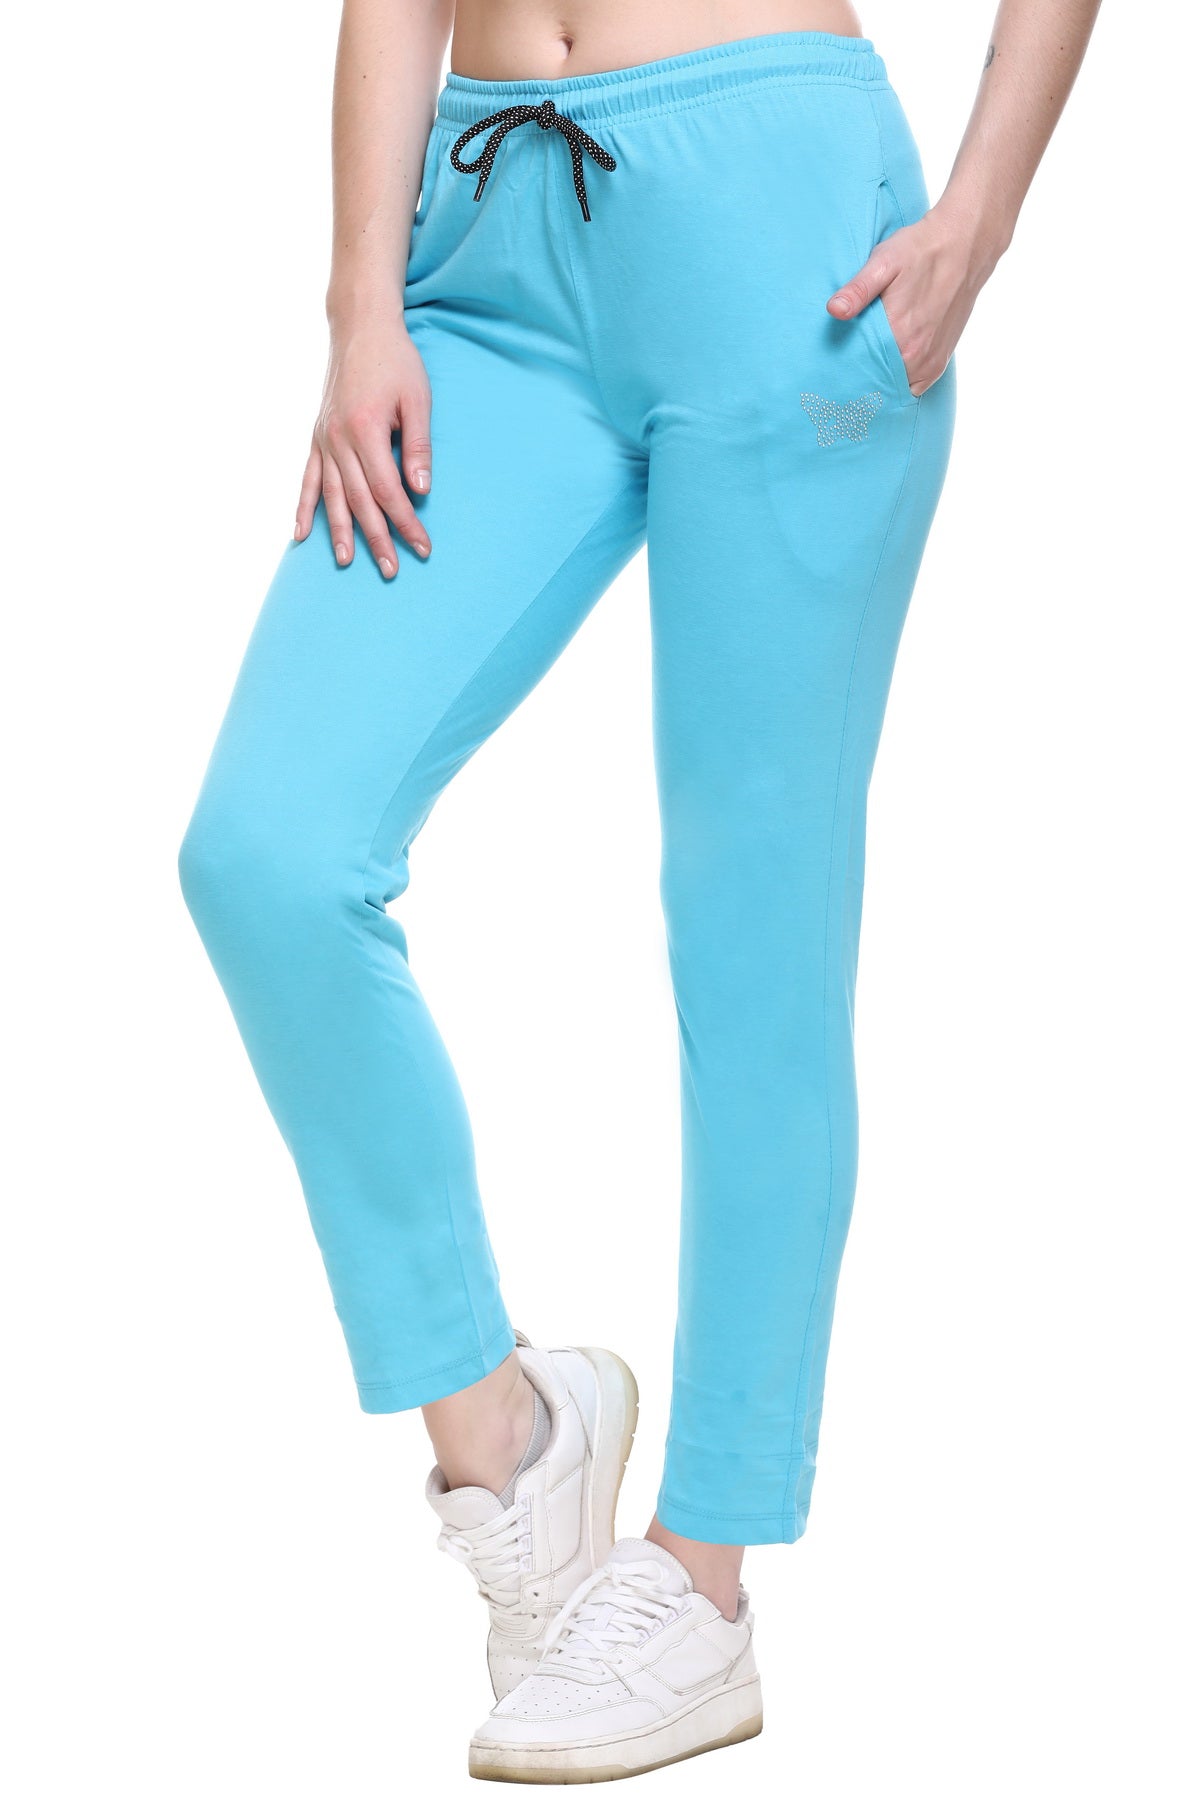 Buy Cotton Aqua Track pants for Women online in India